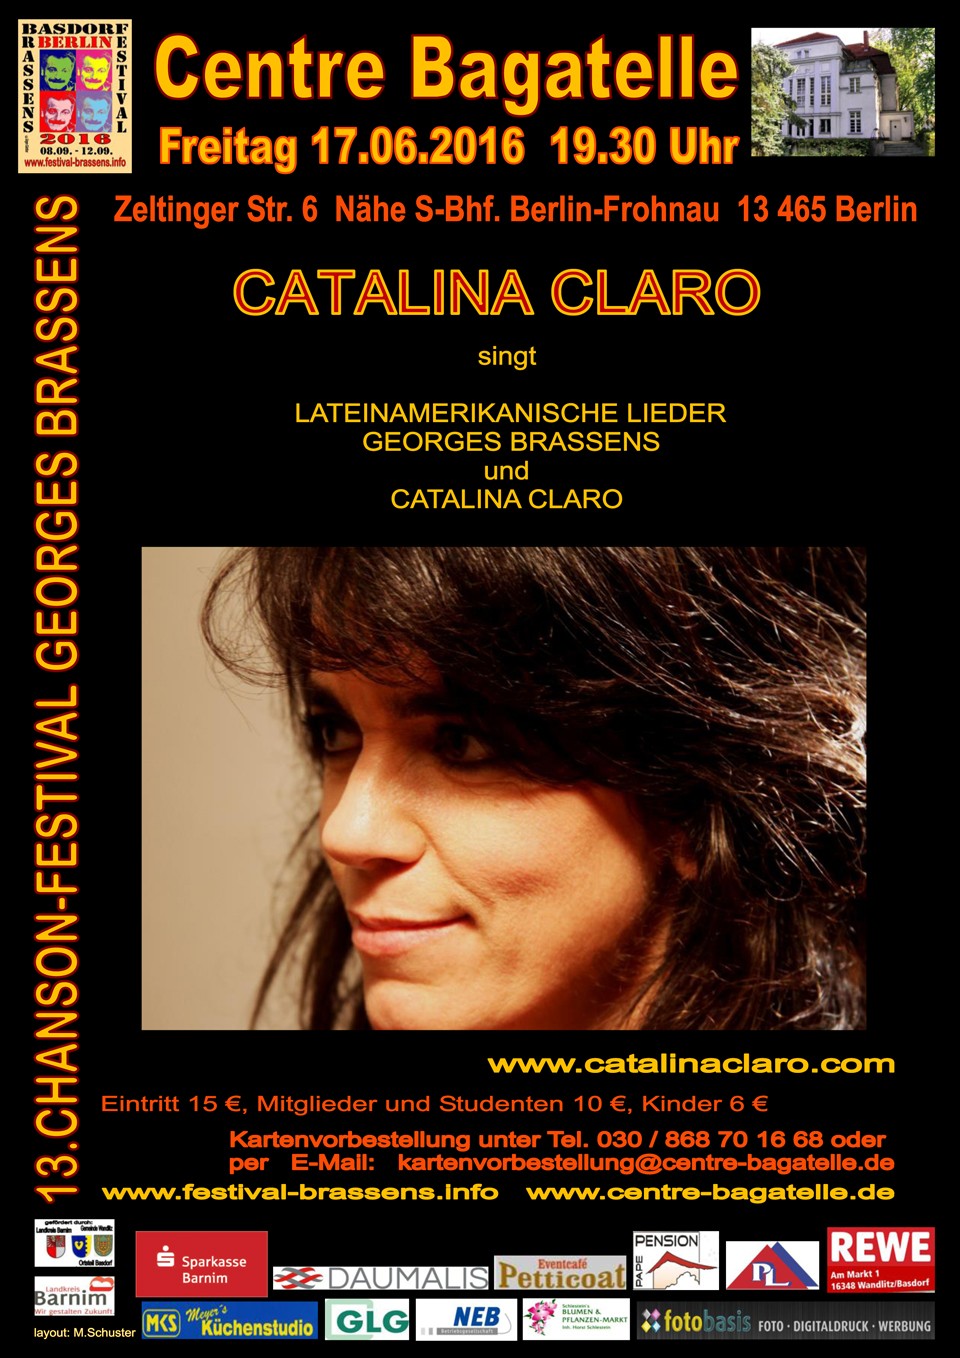 Catalina Claro im Centre Bagatelle Berlin